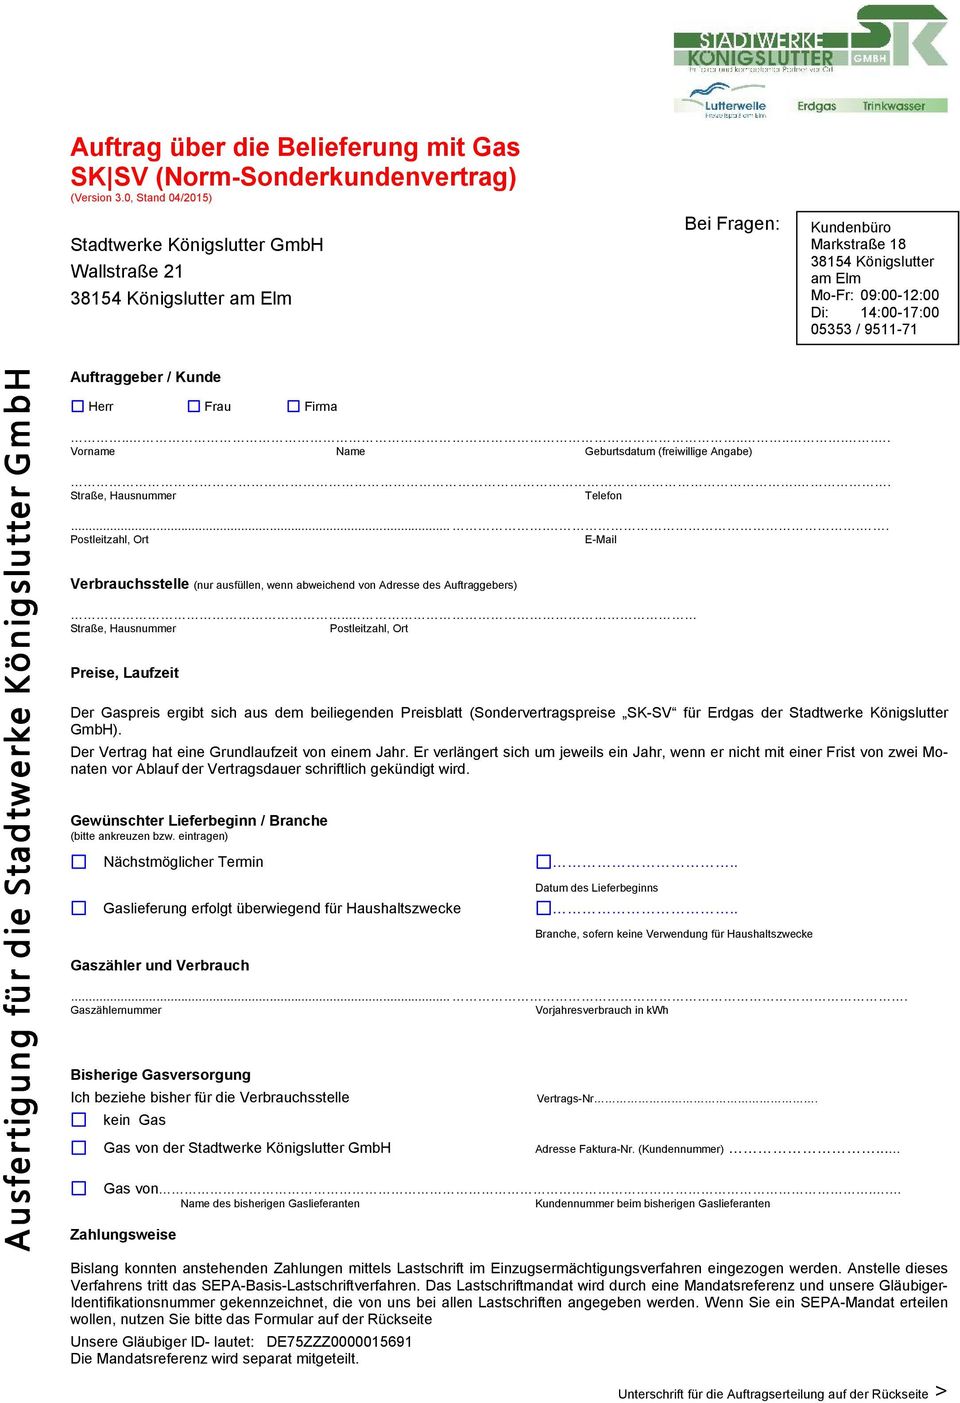 9511-71 Auftraggeber / Kunde Herr Frau Firma....... Vorname Name Geburtsdatum (freiwillige Angabe).. Telefon.